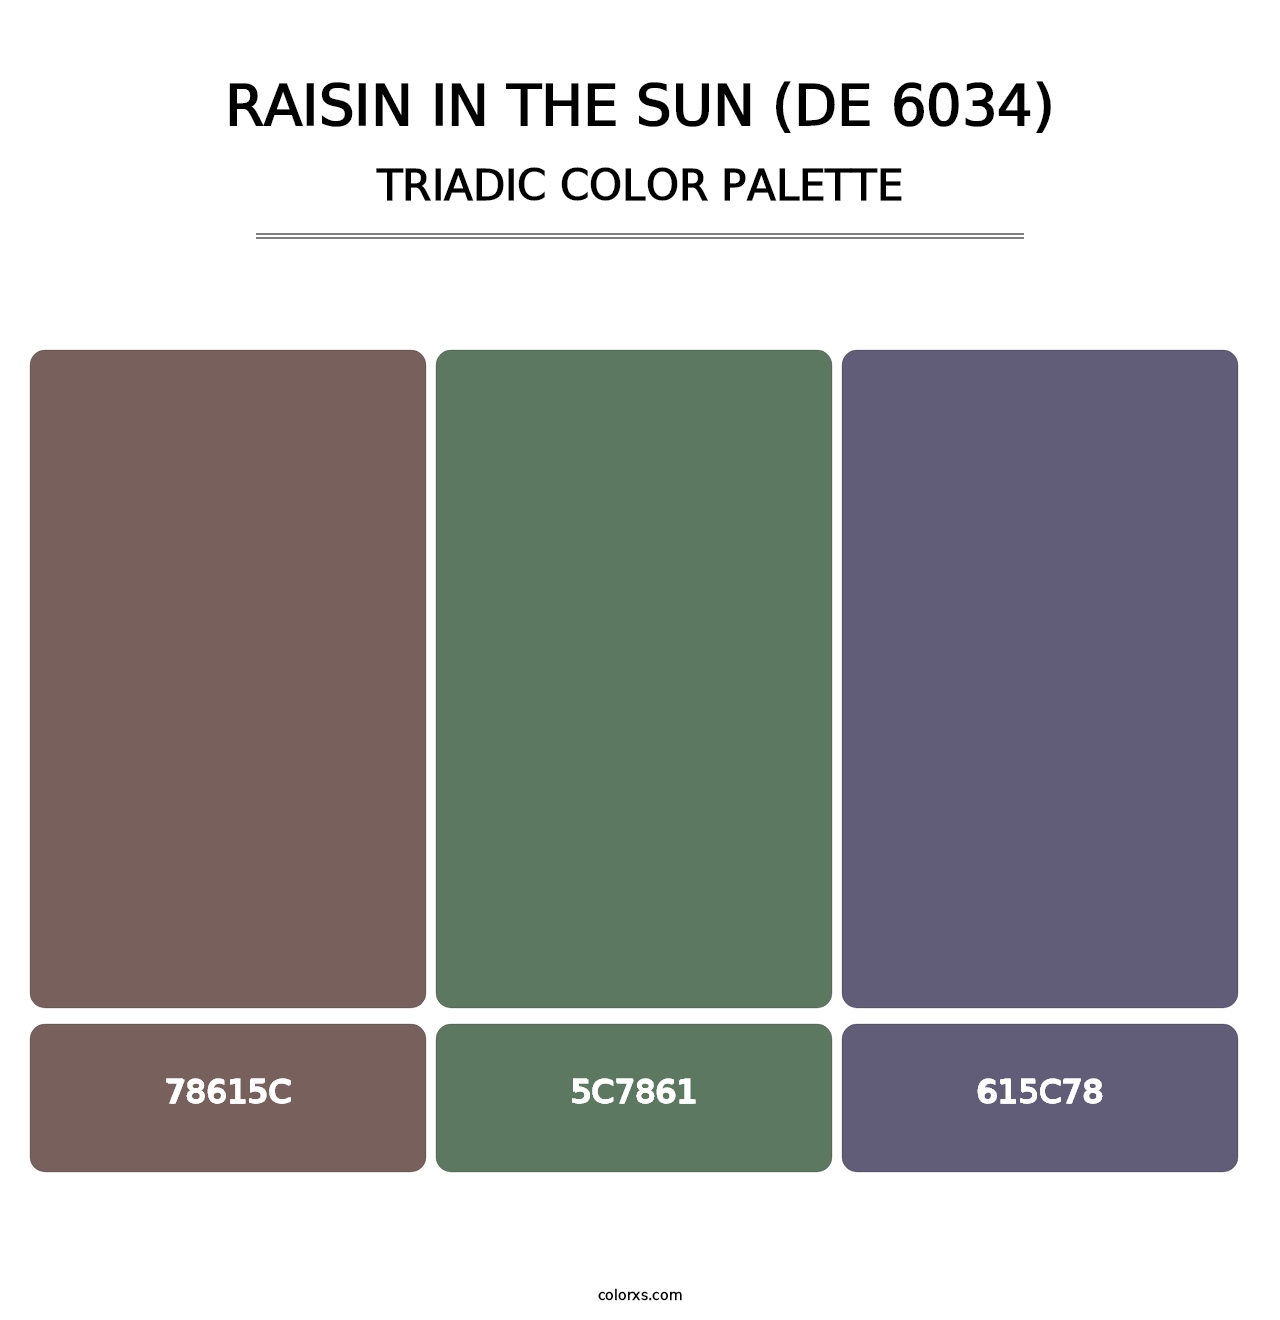 Raisin in the Sun (DE 6034) - Triadic Color Palette